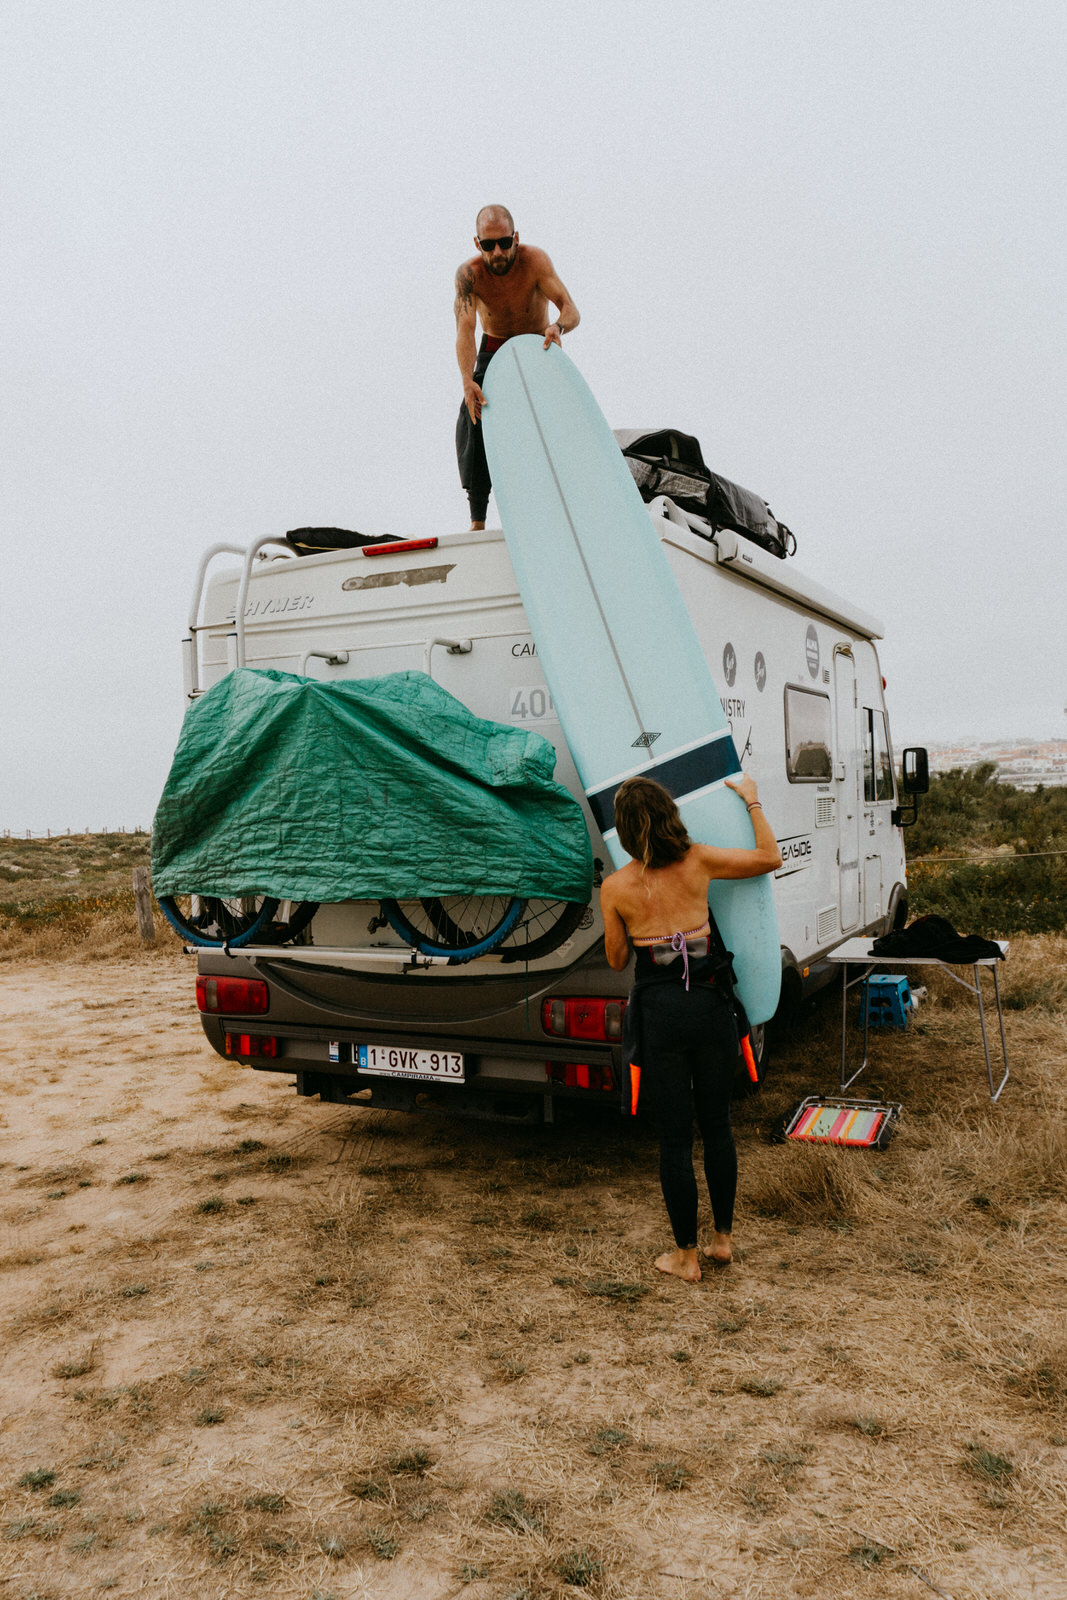 Atlantic Surf Love by Viés Photography